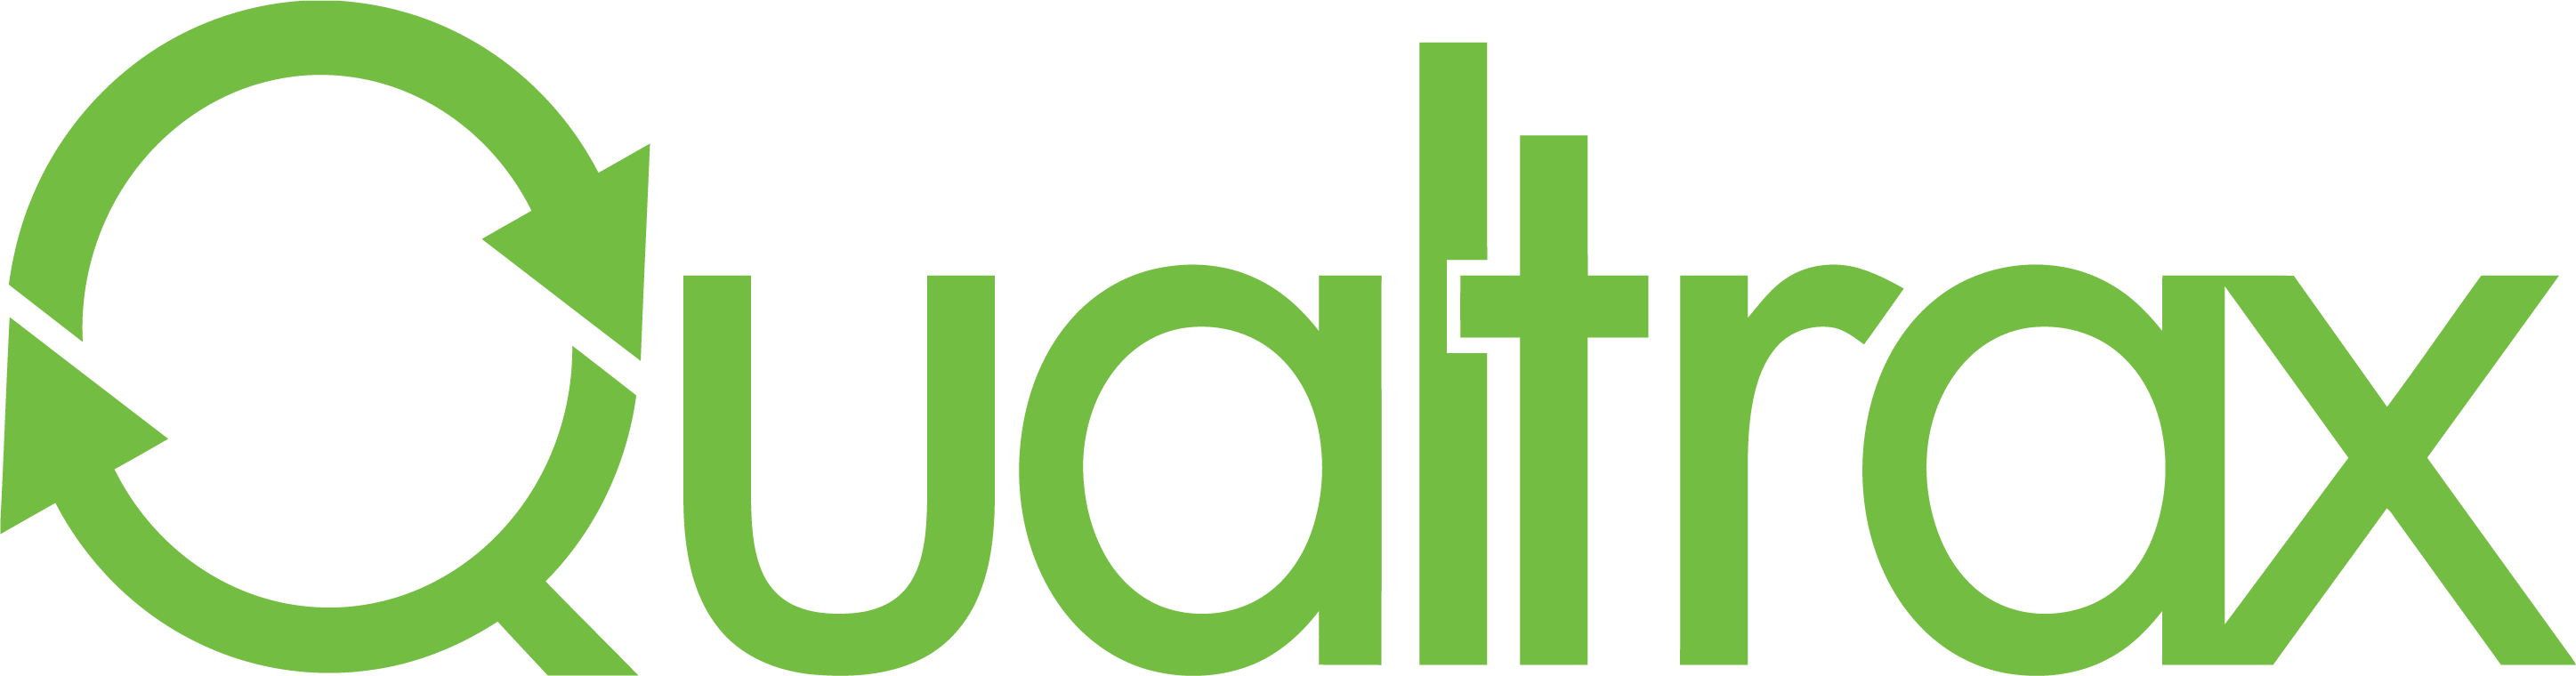 Qualtrax logo